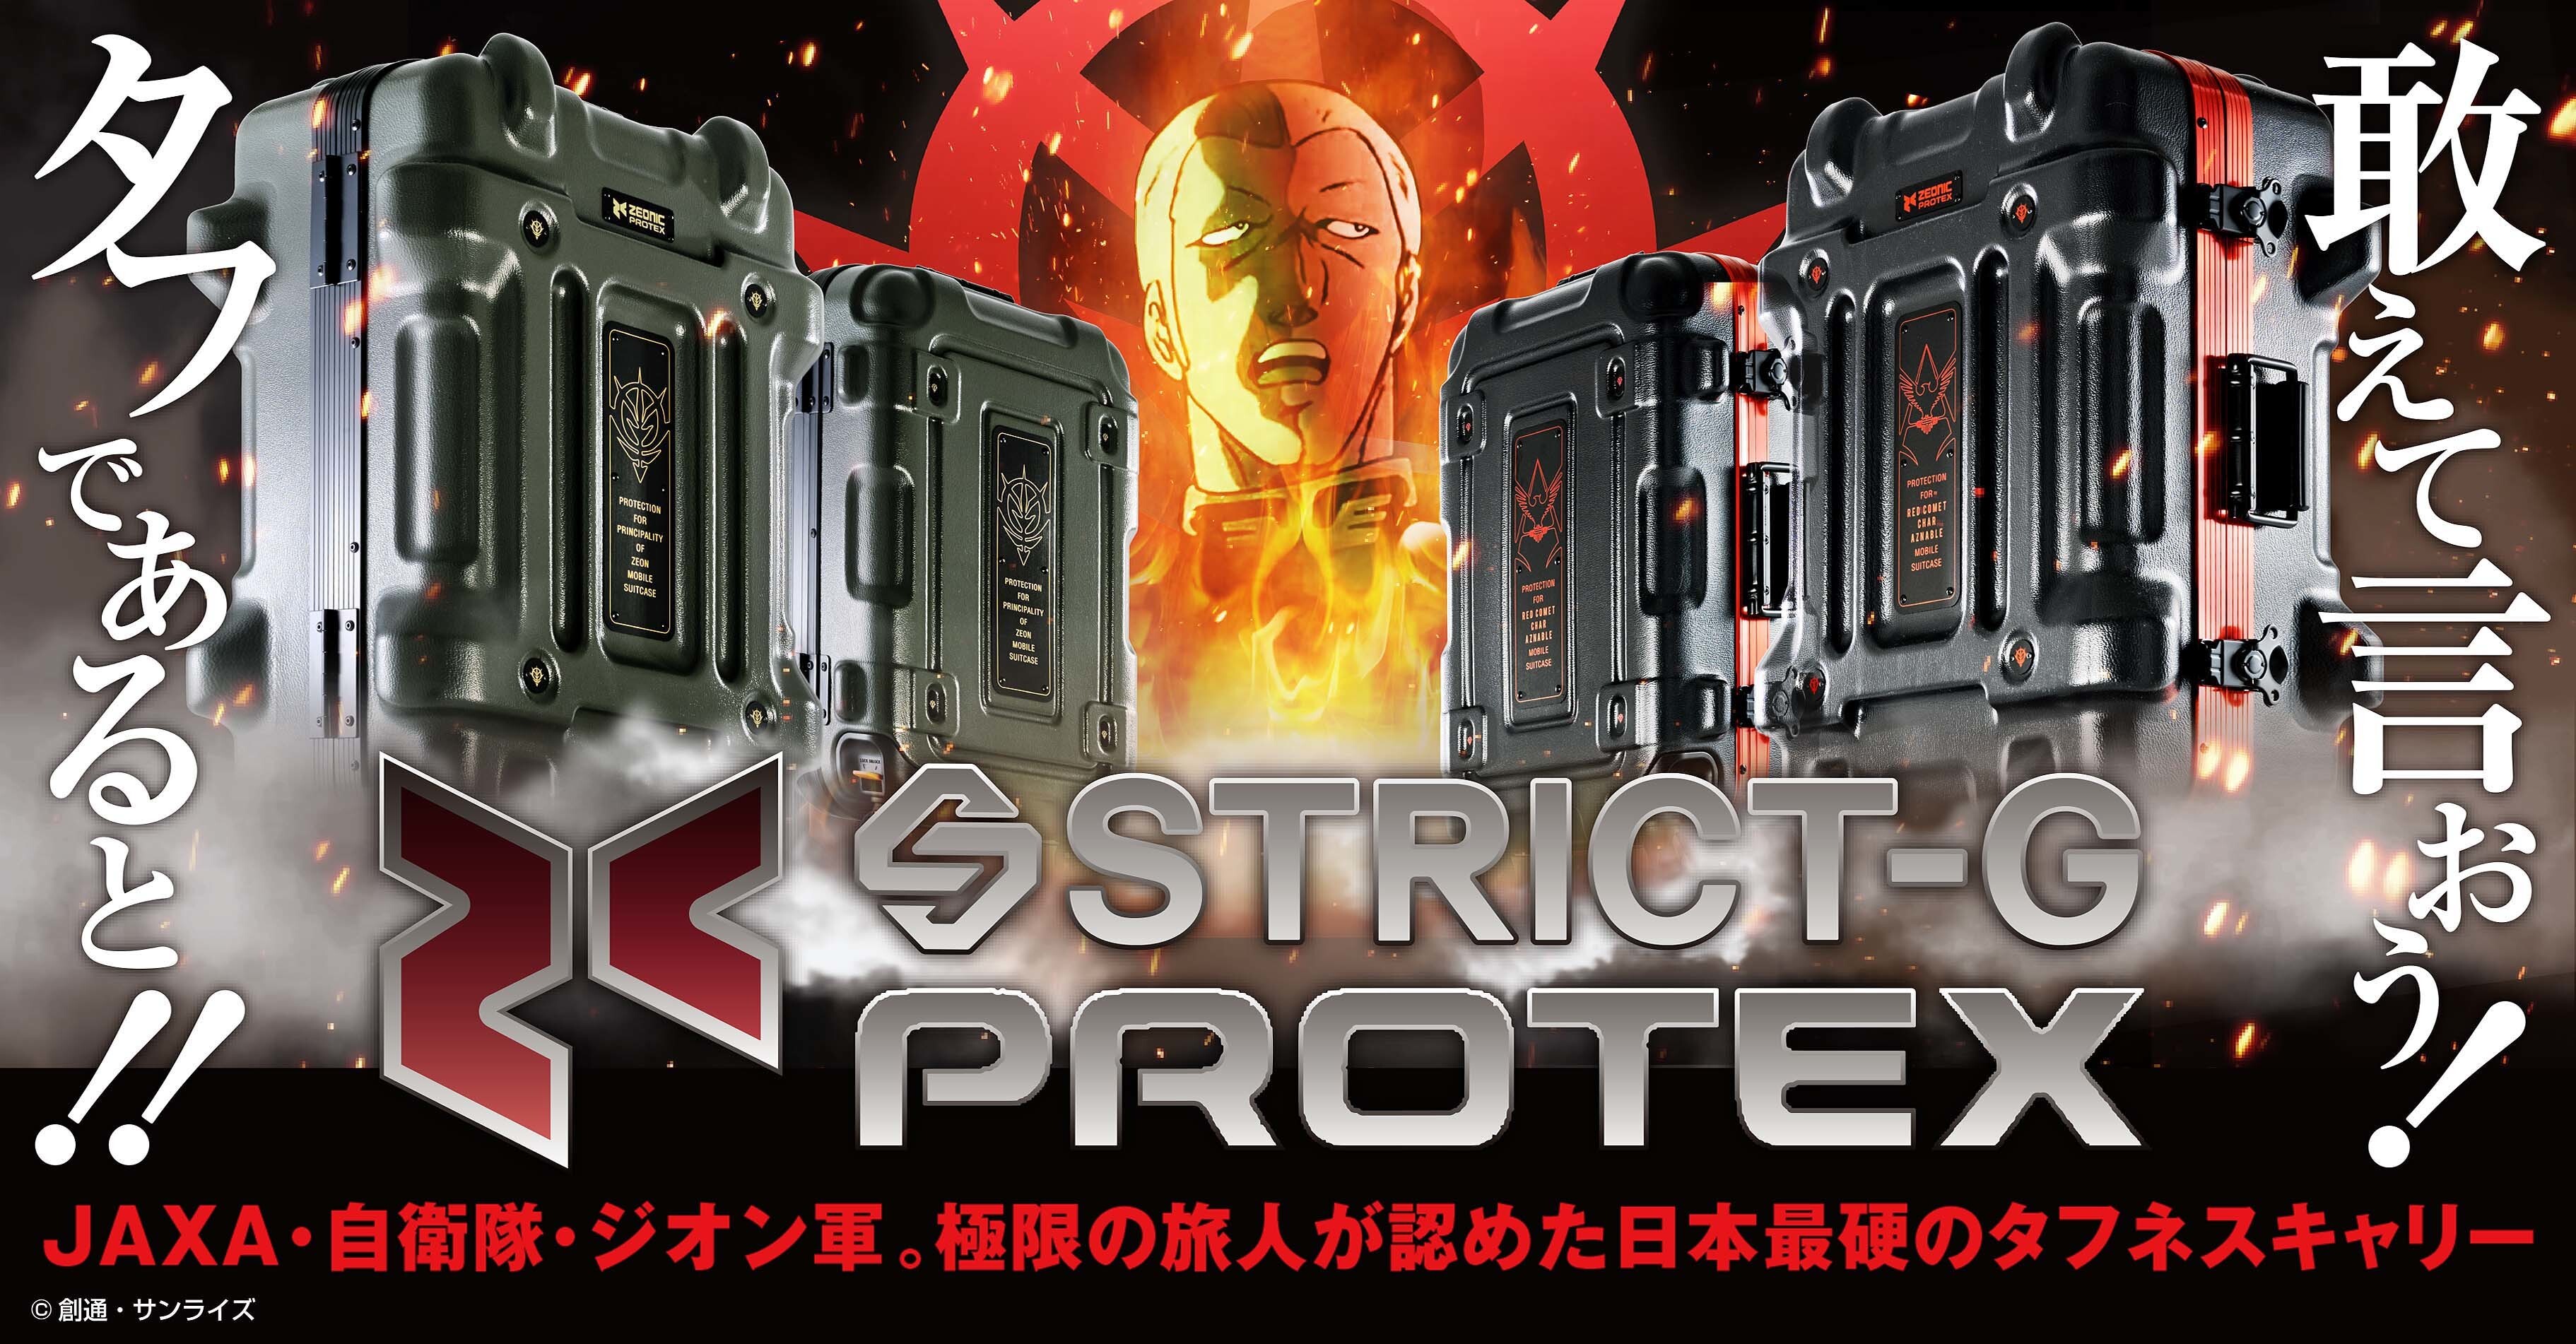 STRICT-G × PROTEXキャリーケース